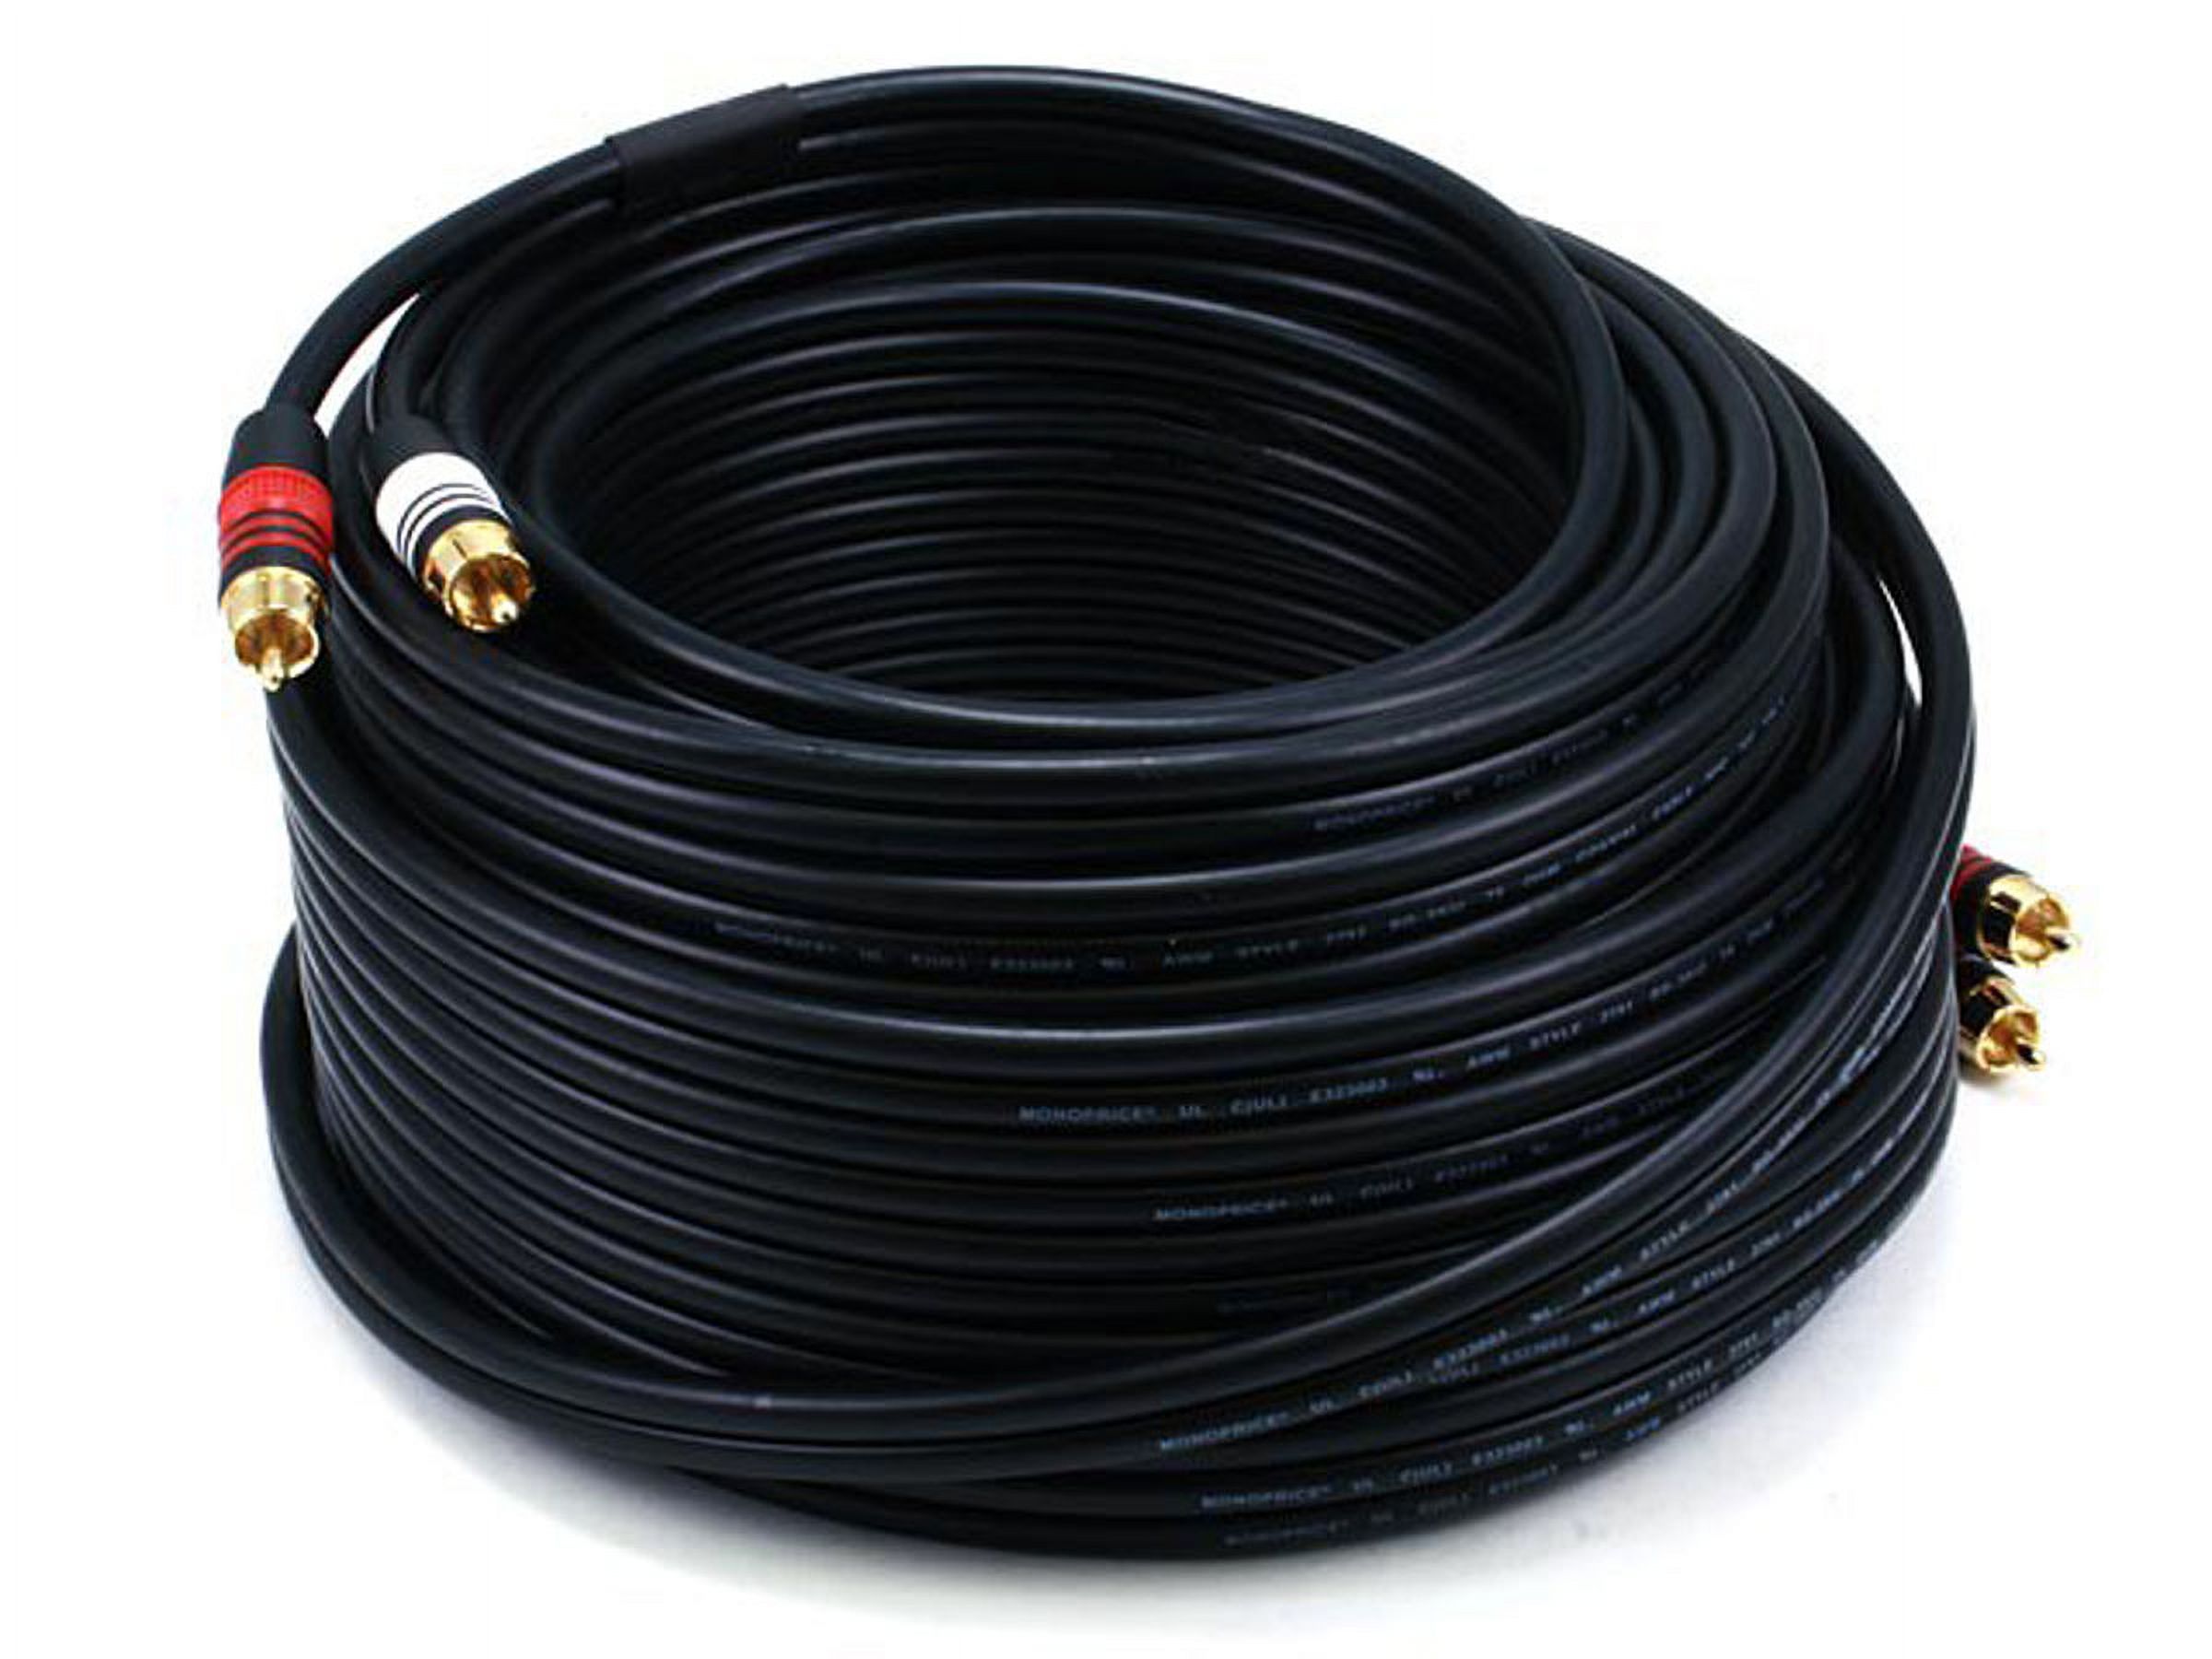 Monoprice Premium RCA Cable - 75 Feet - Black | 2 RCA Plug to 2 RCA Plug, Male to Male, 22AWG - image 1 of 2